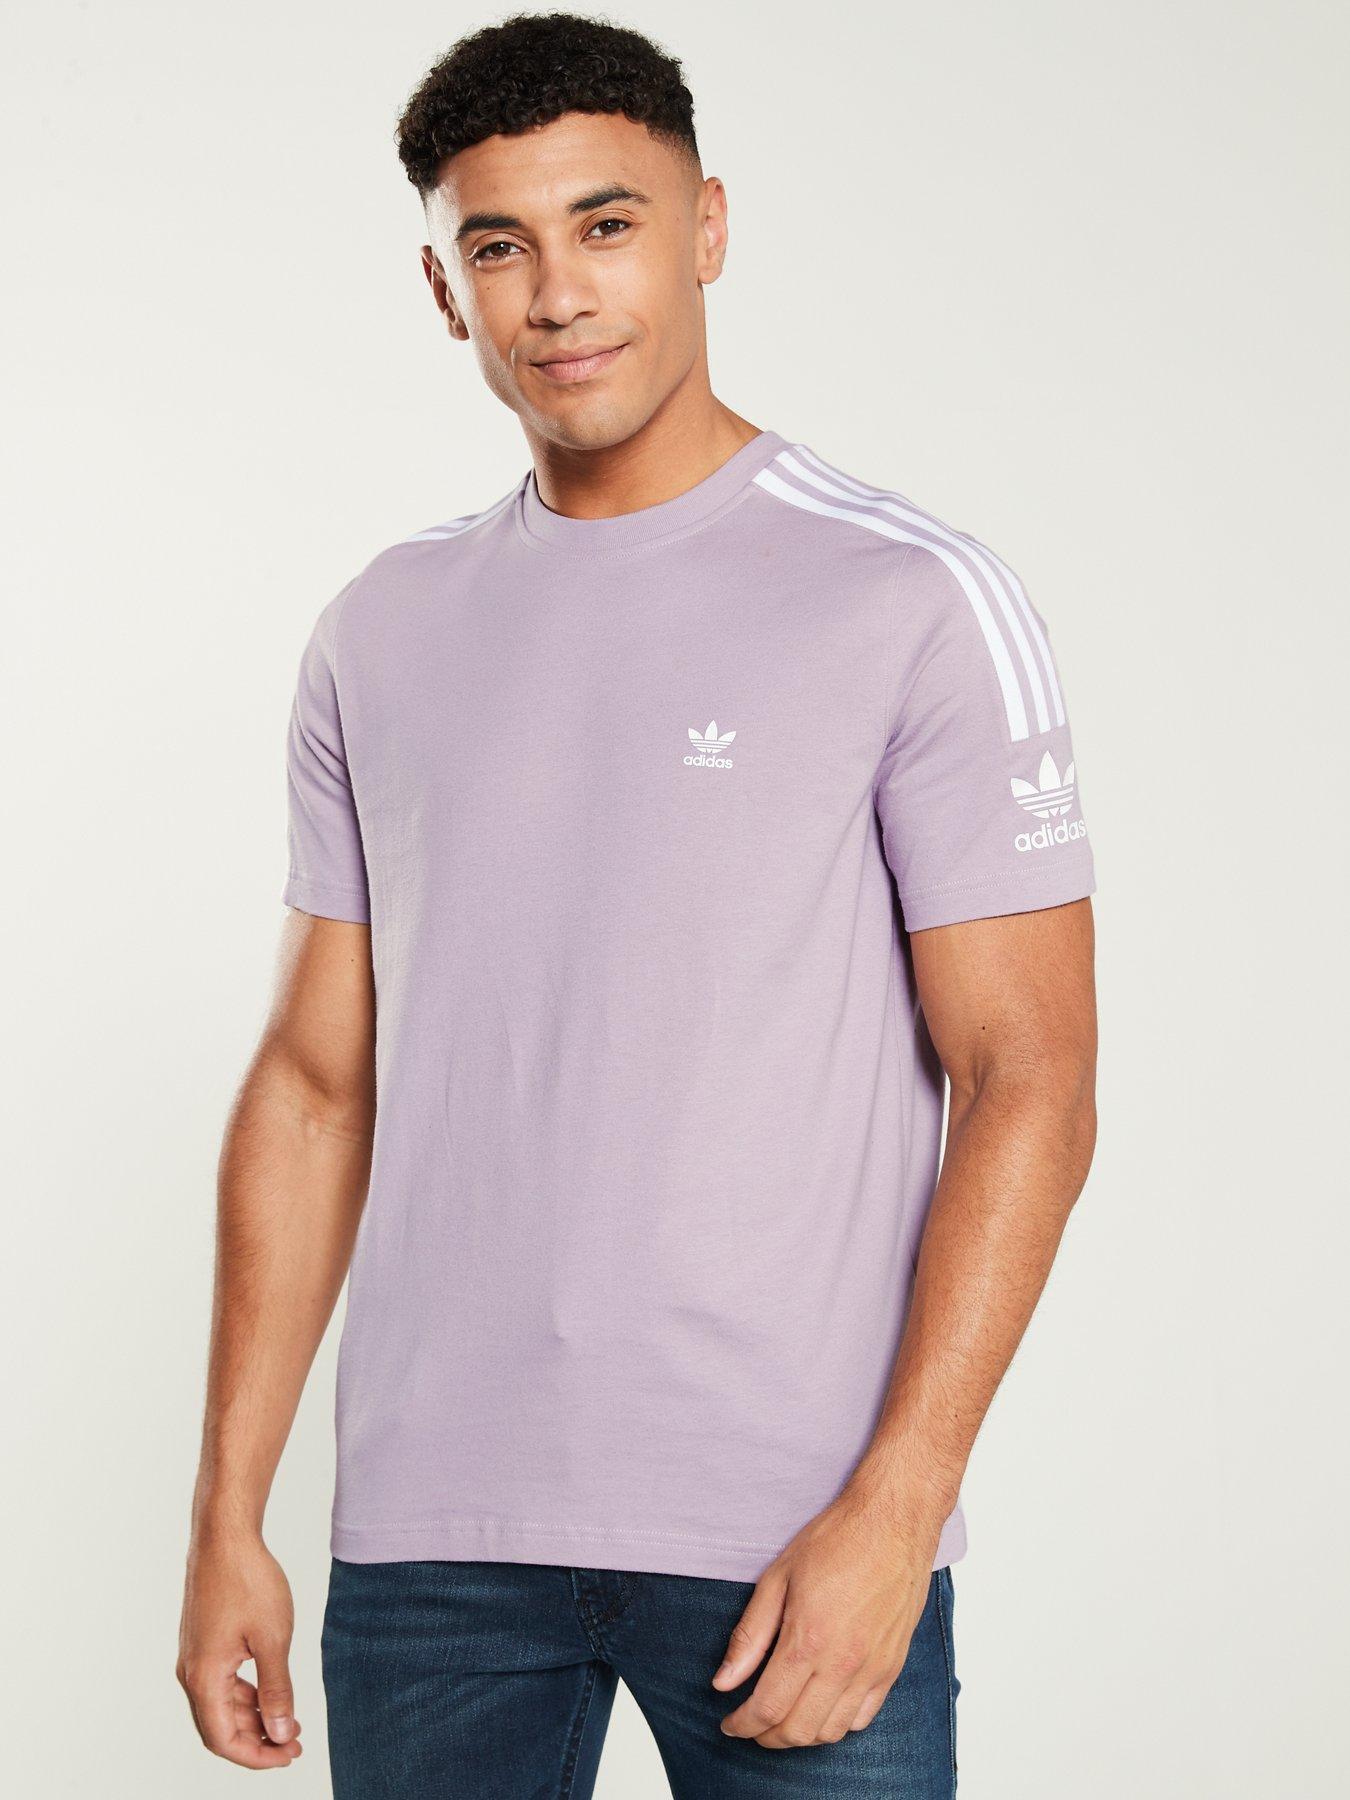 lilac adidas shirt